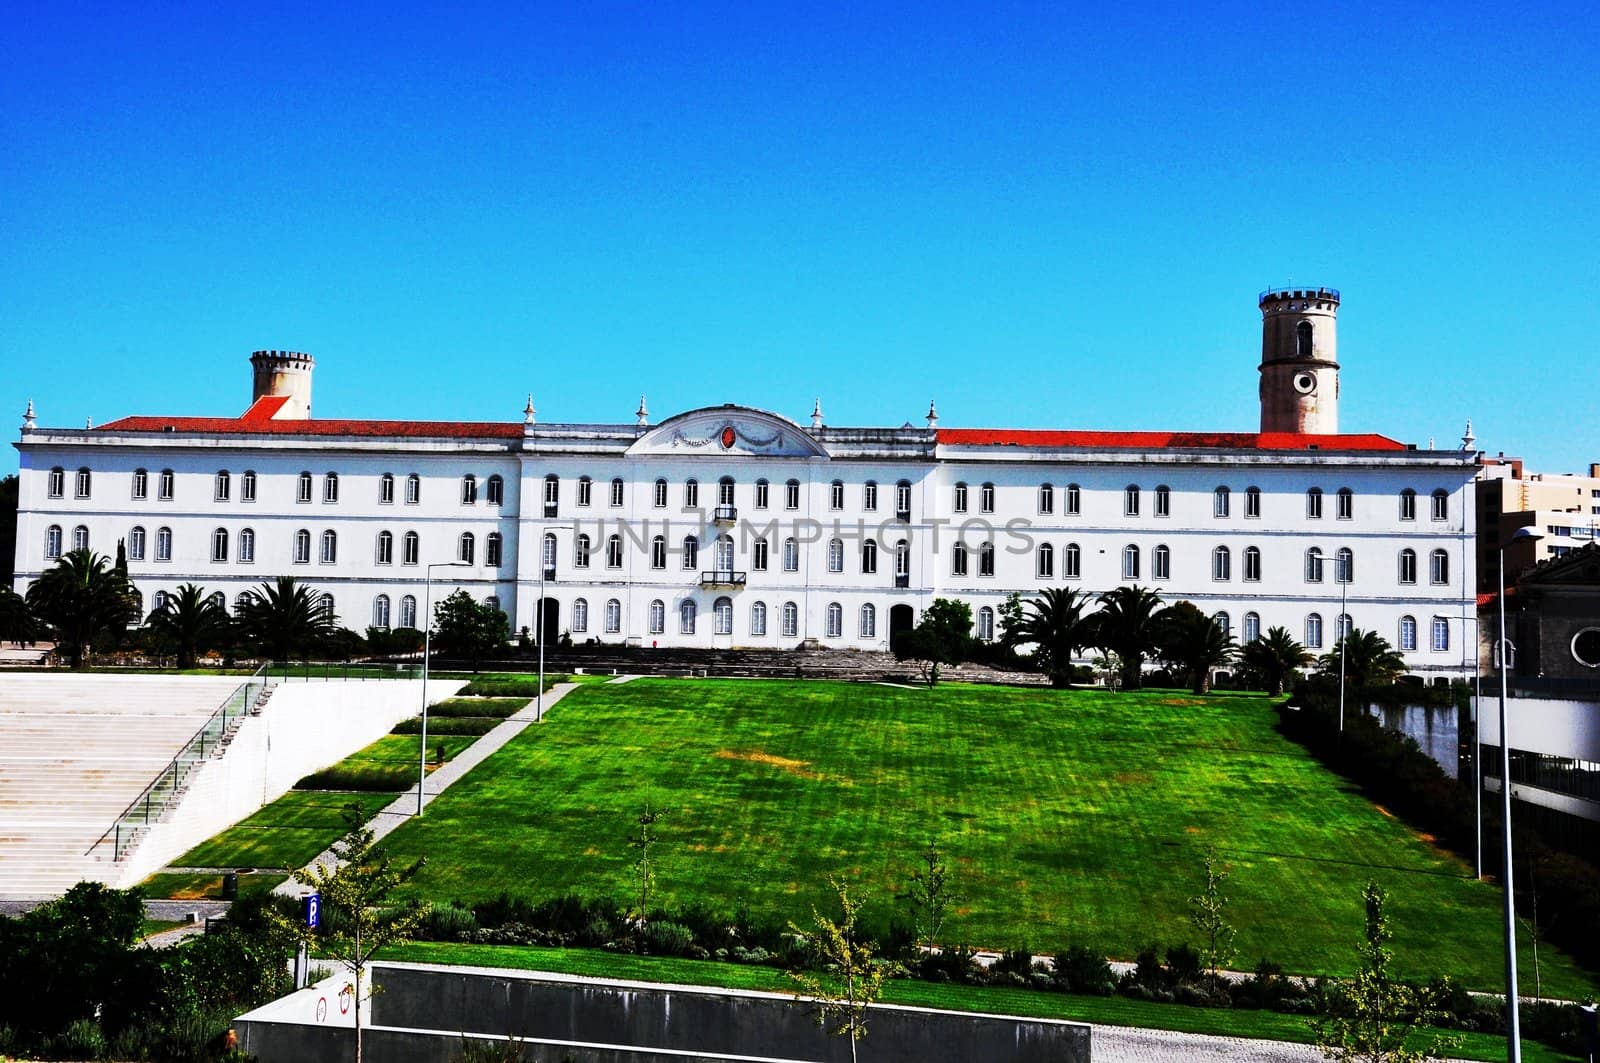 University in Lisbon by vas25